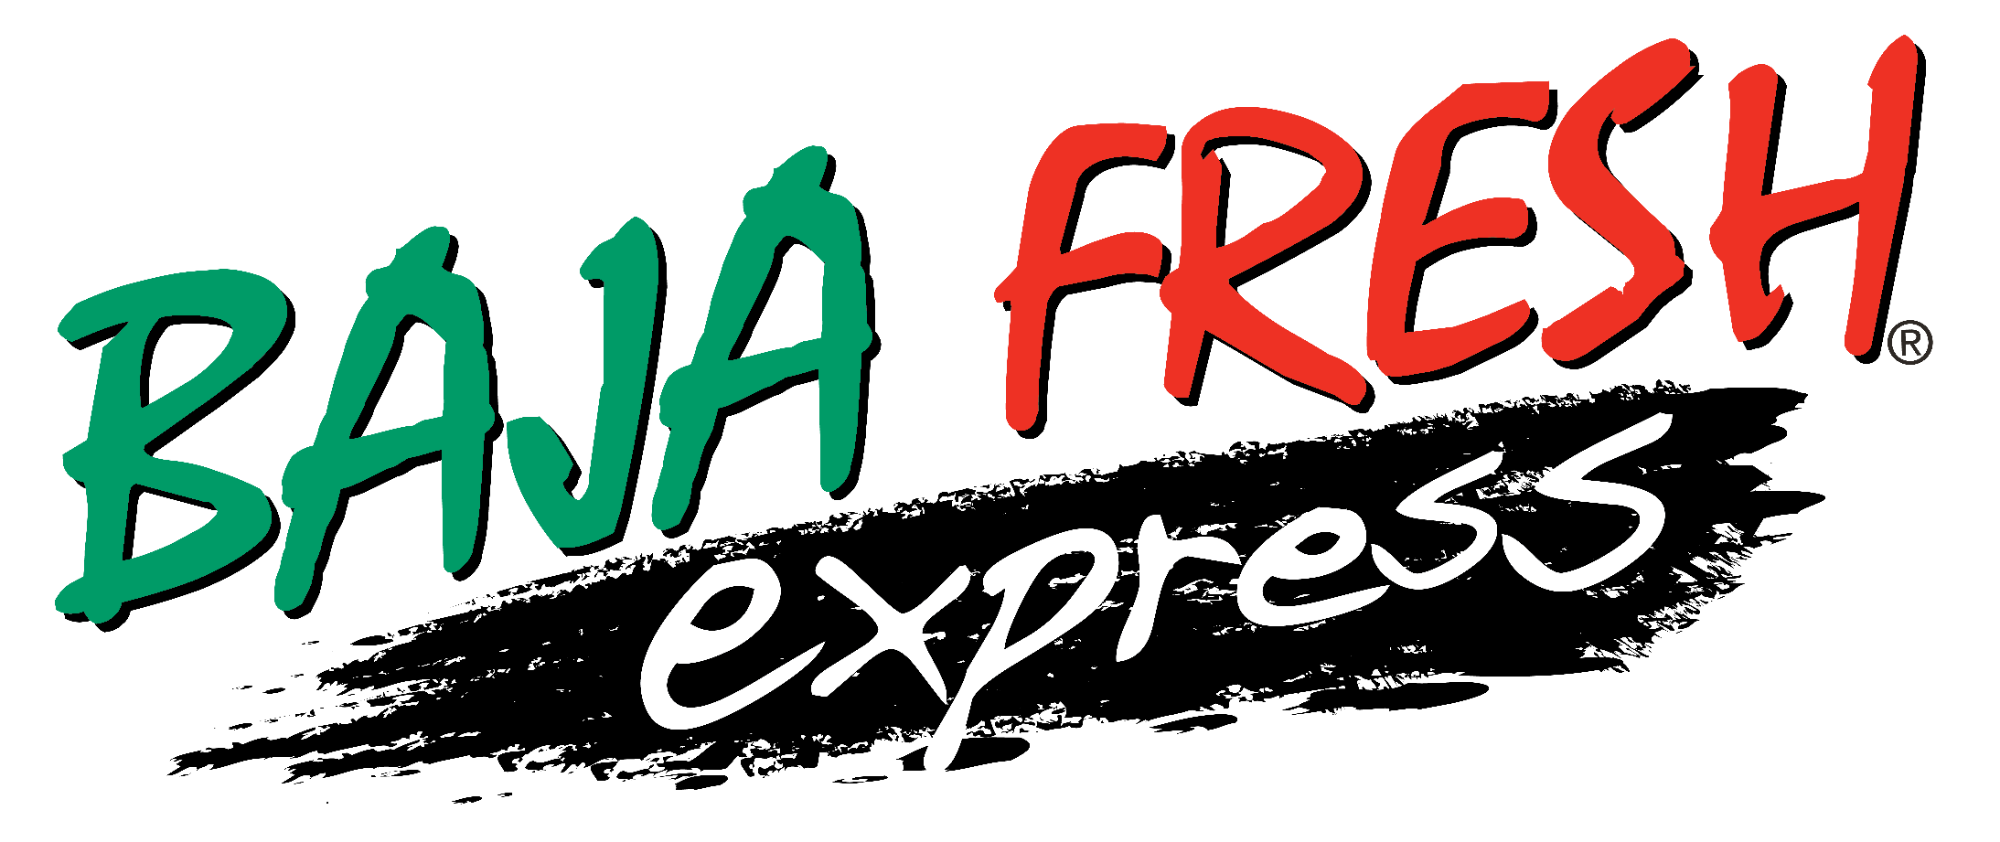 Baja Fresh Express logo